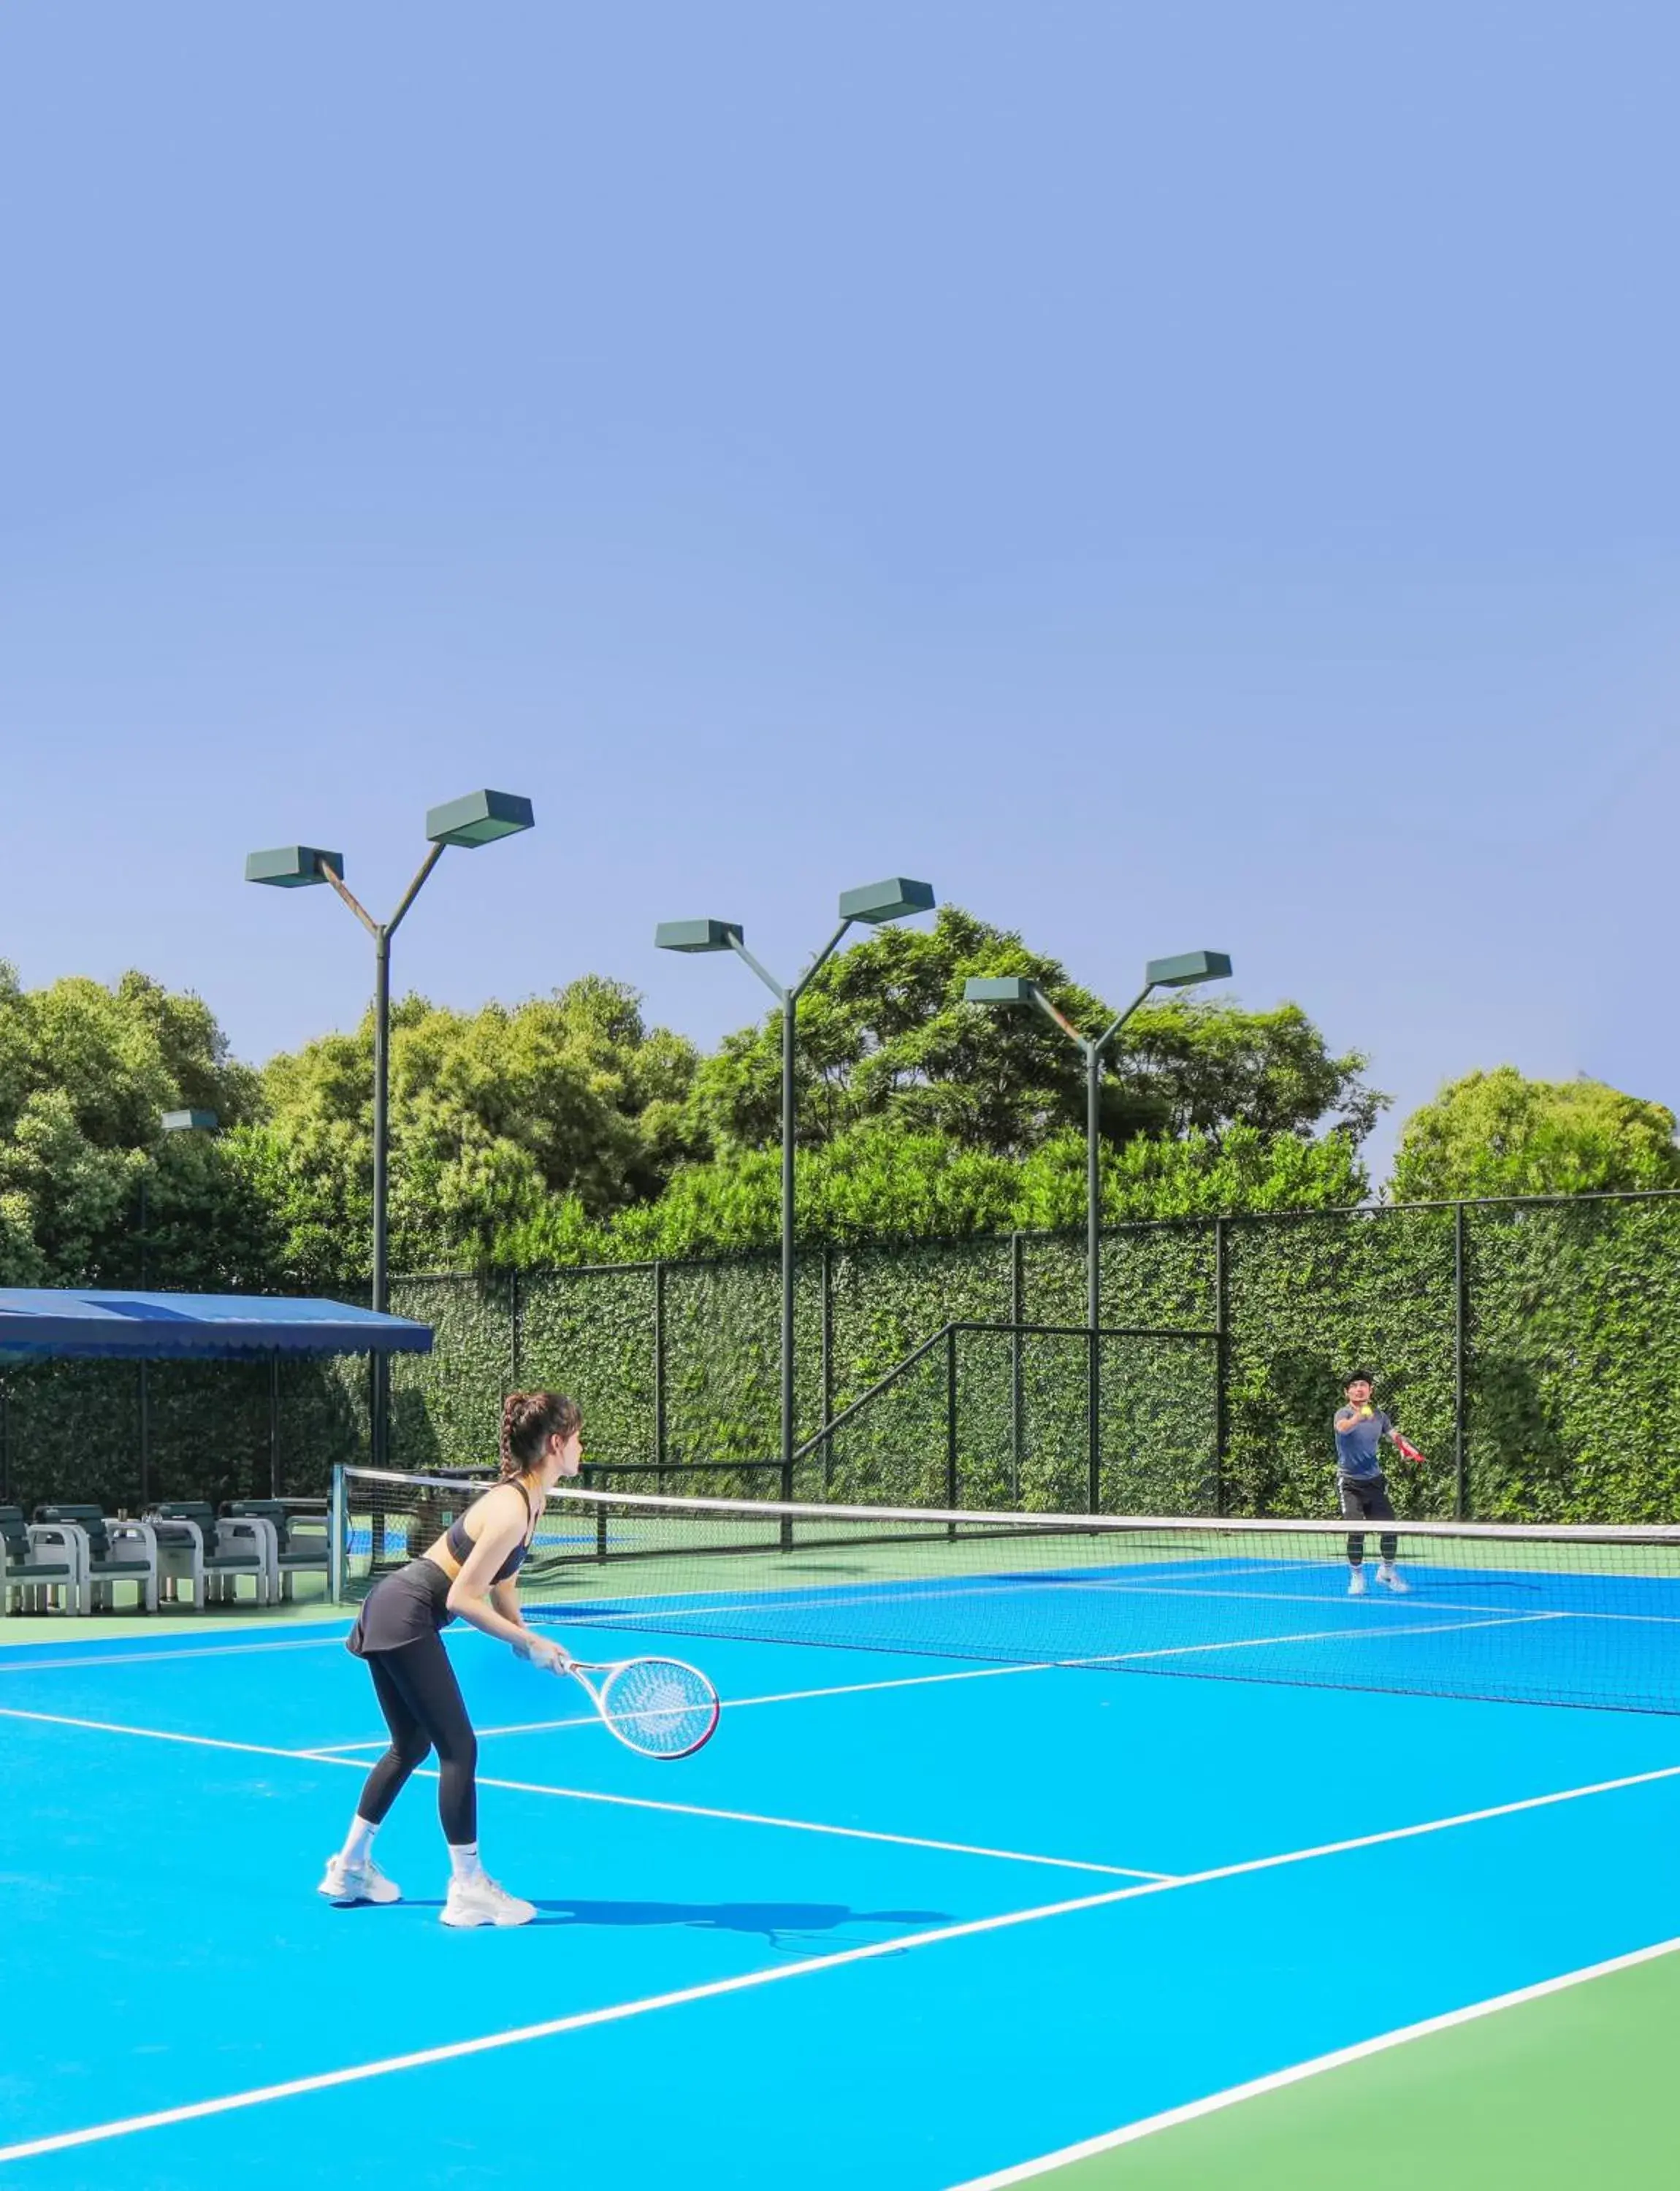 Tennis court, Other Activities in Pan Pacific Ningbo